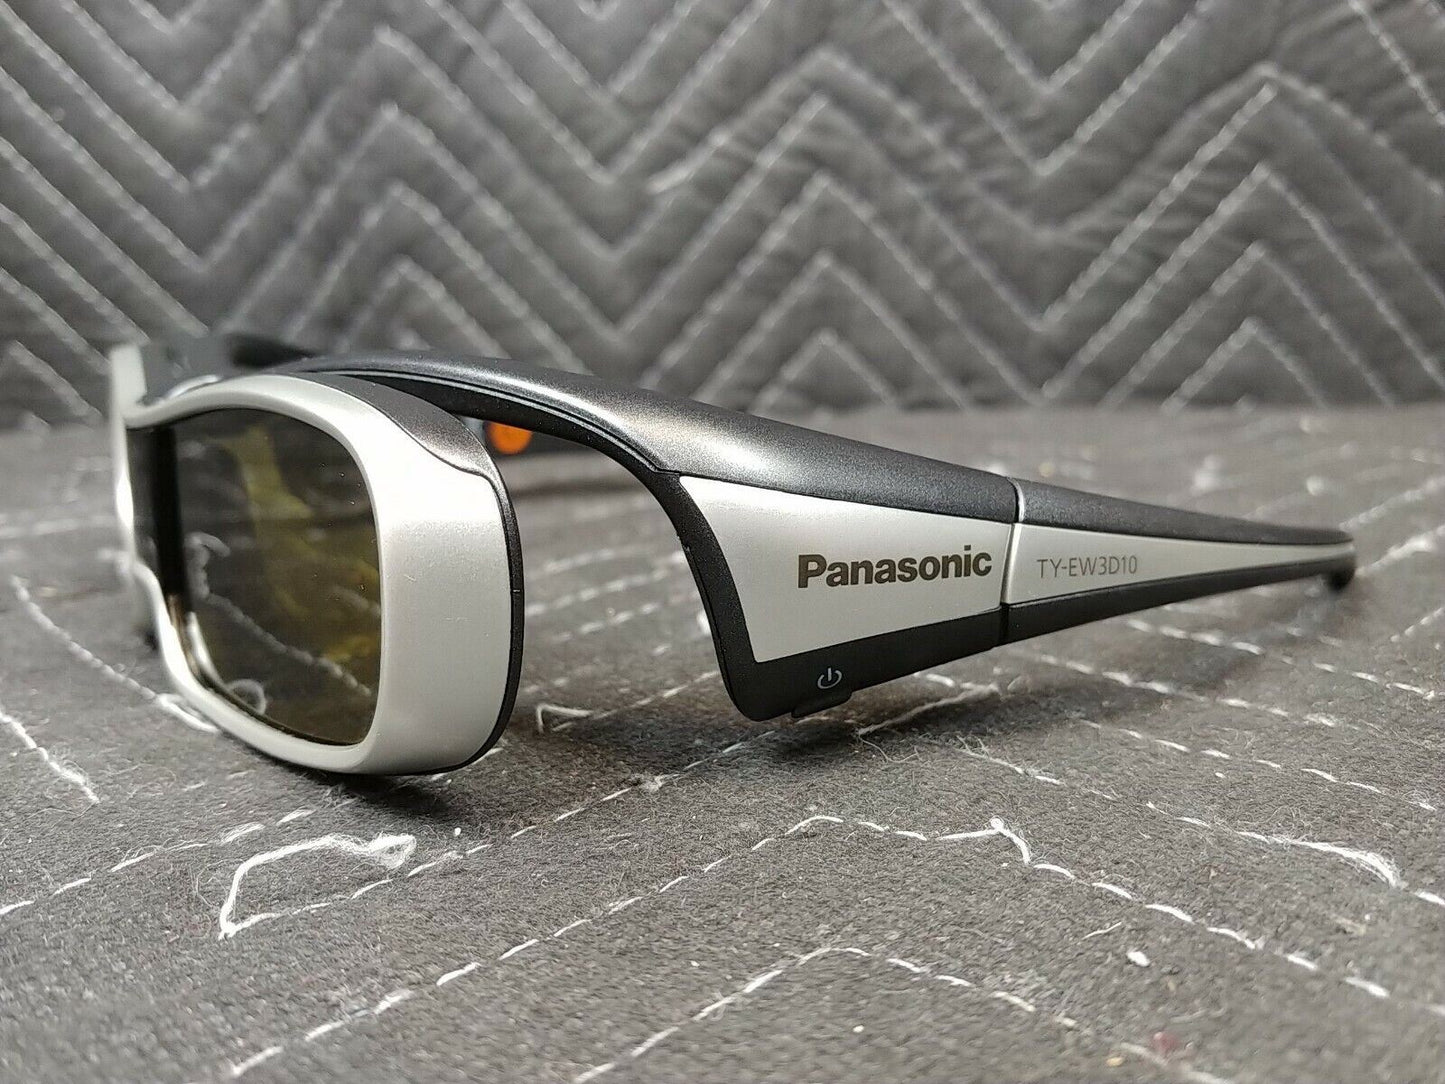 Panasonic TY-EW3D10 Full HD 3D Glasses for Panasonic 3D HDTVs w/ Case